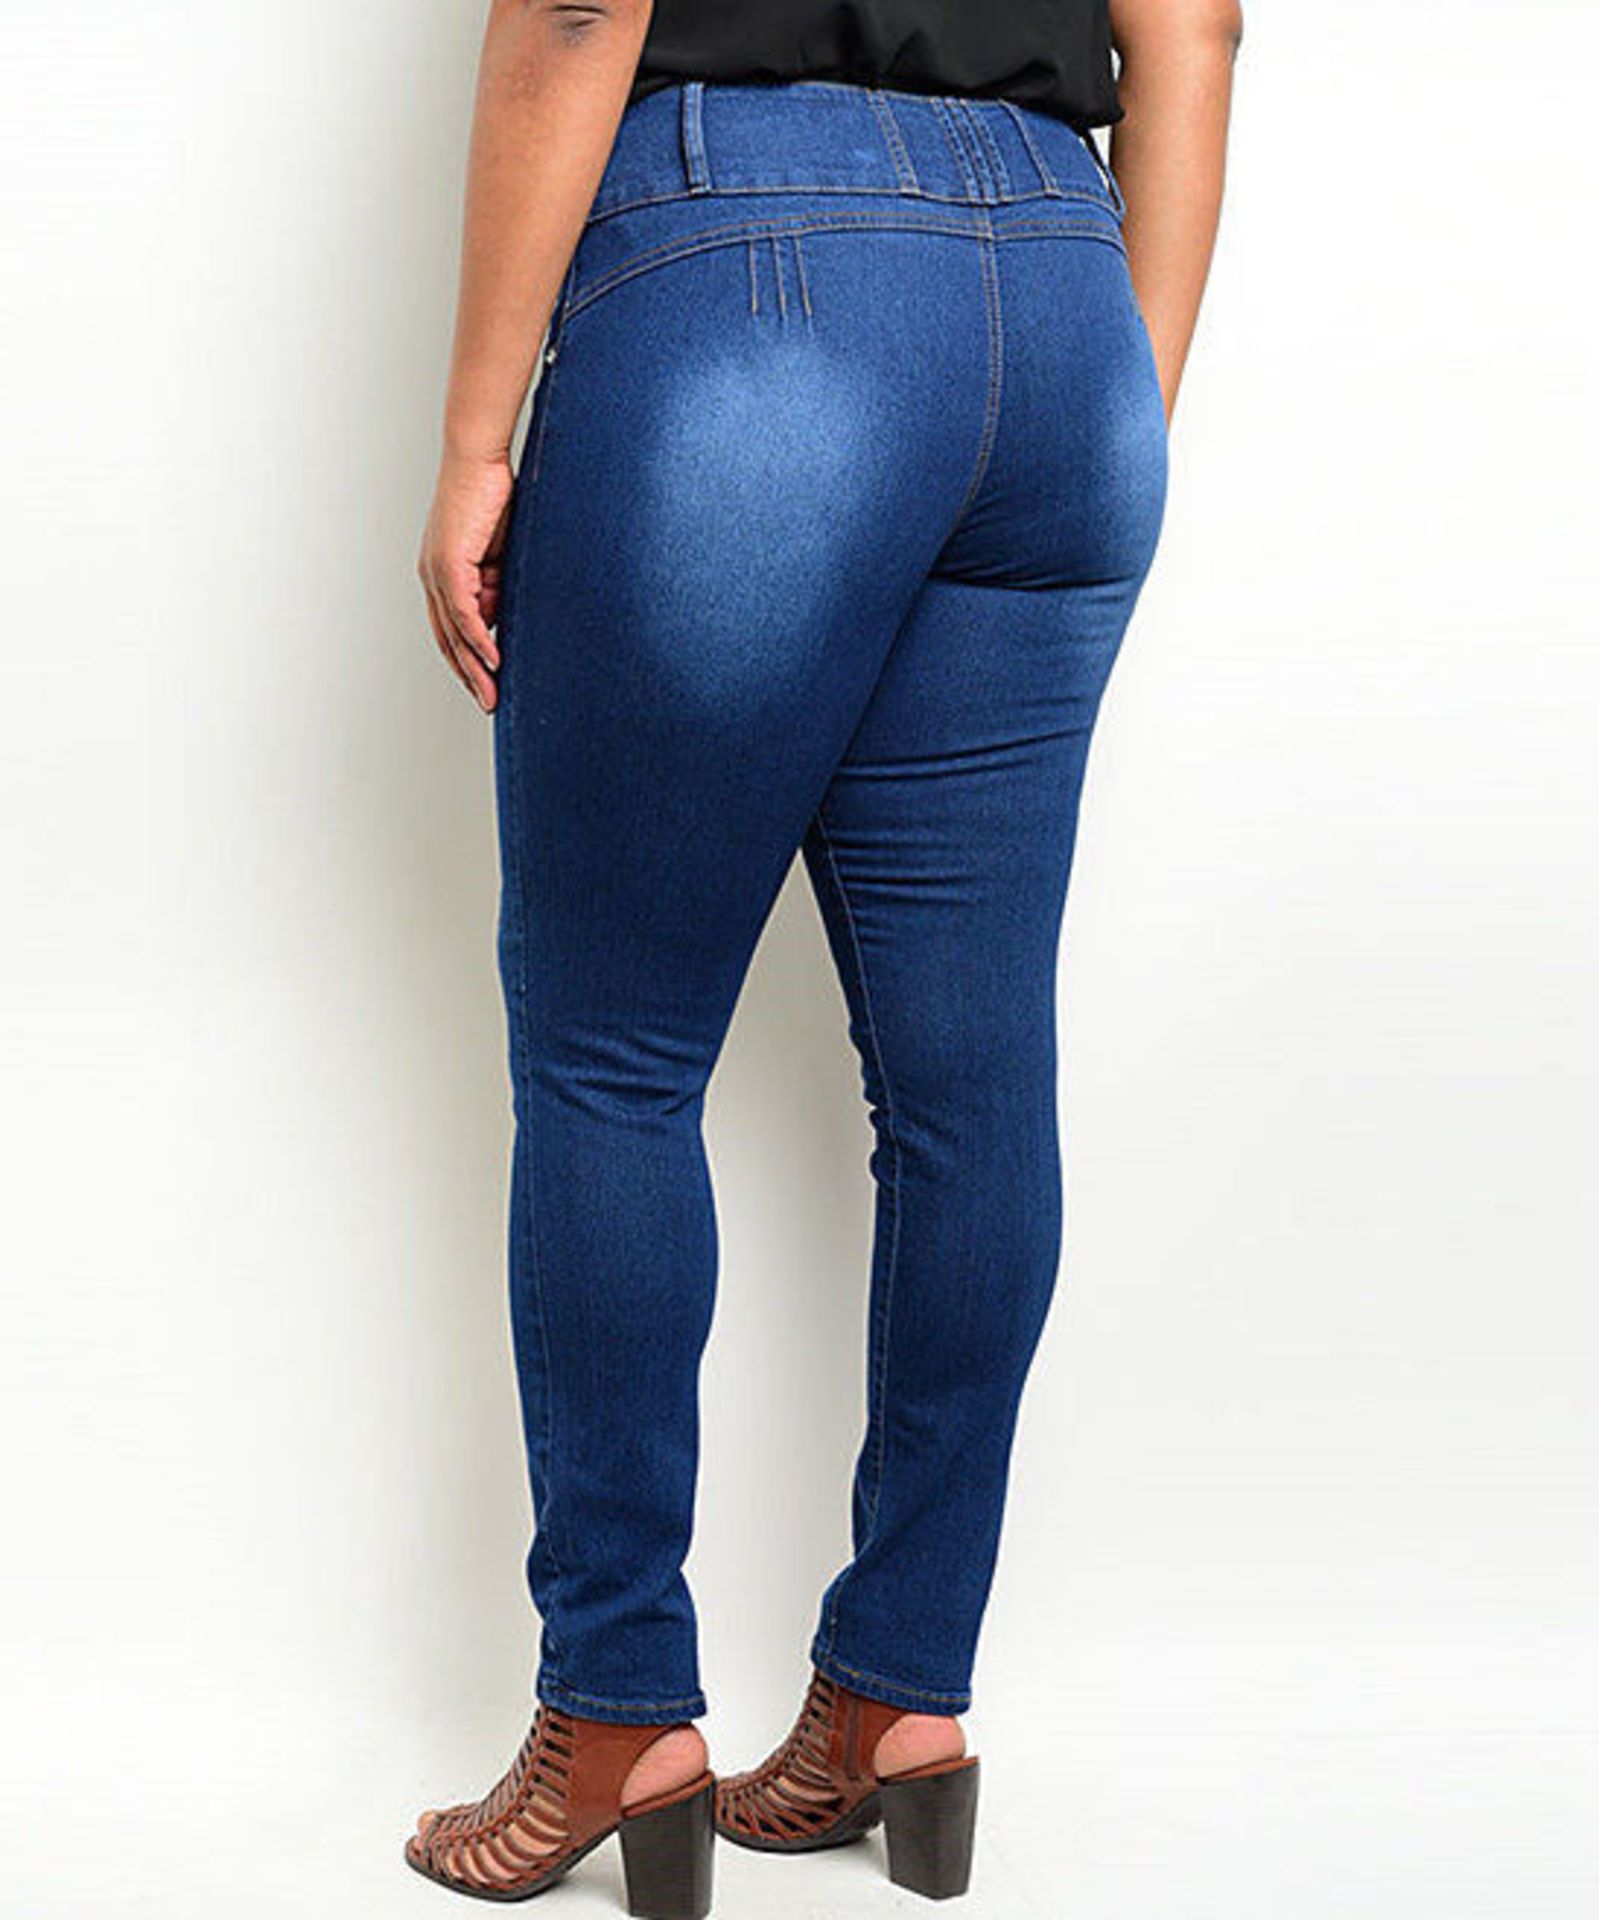 Ladies Designer Blue Denim Jeans (US 18/UK 22/EU 50) (New with tags) [Ref: 37751249- T-51]